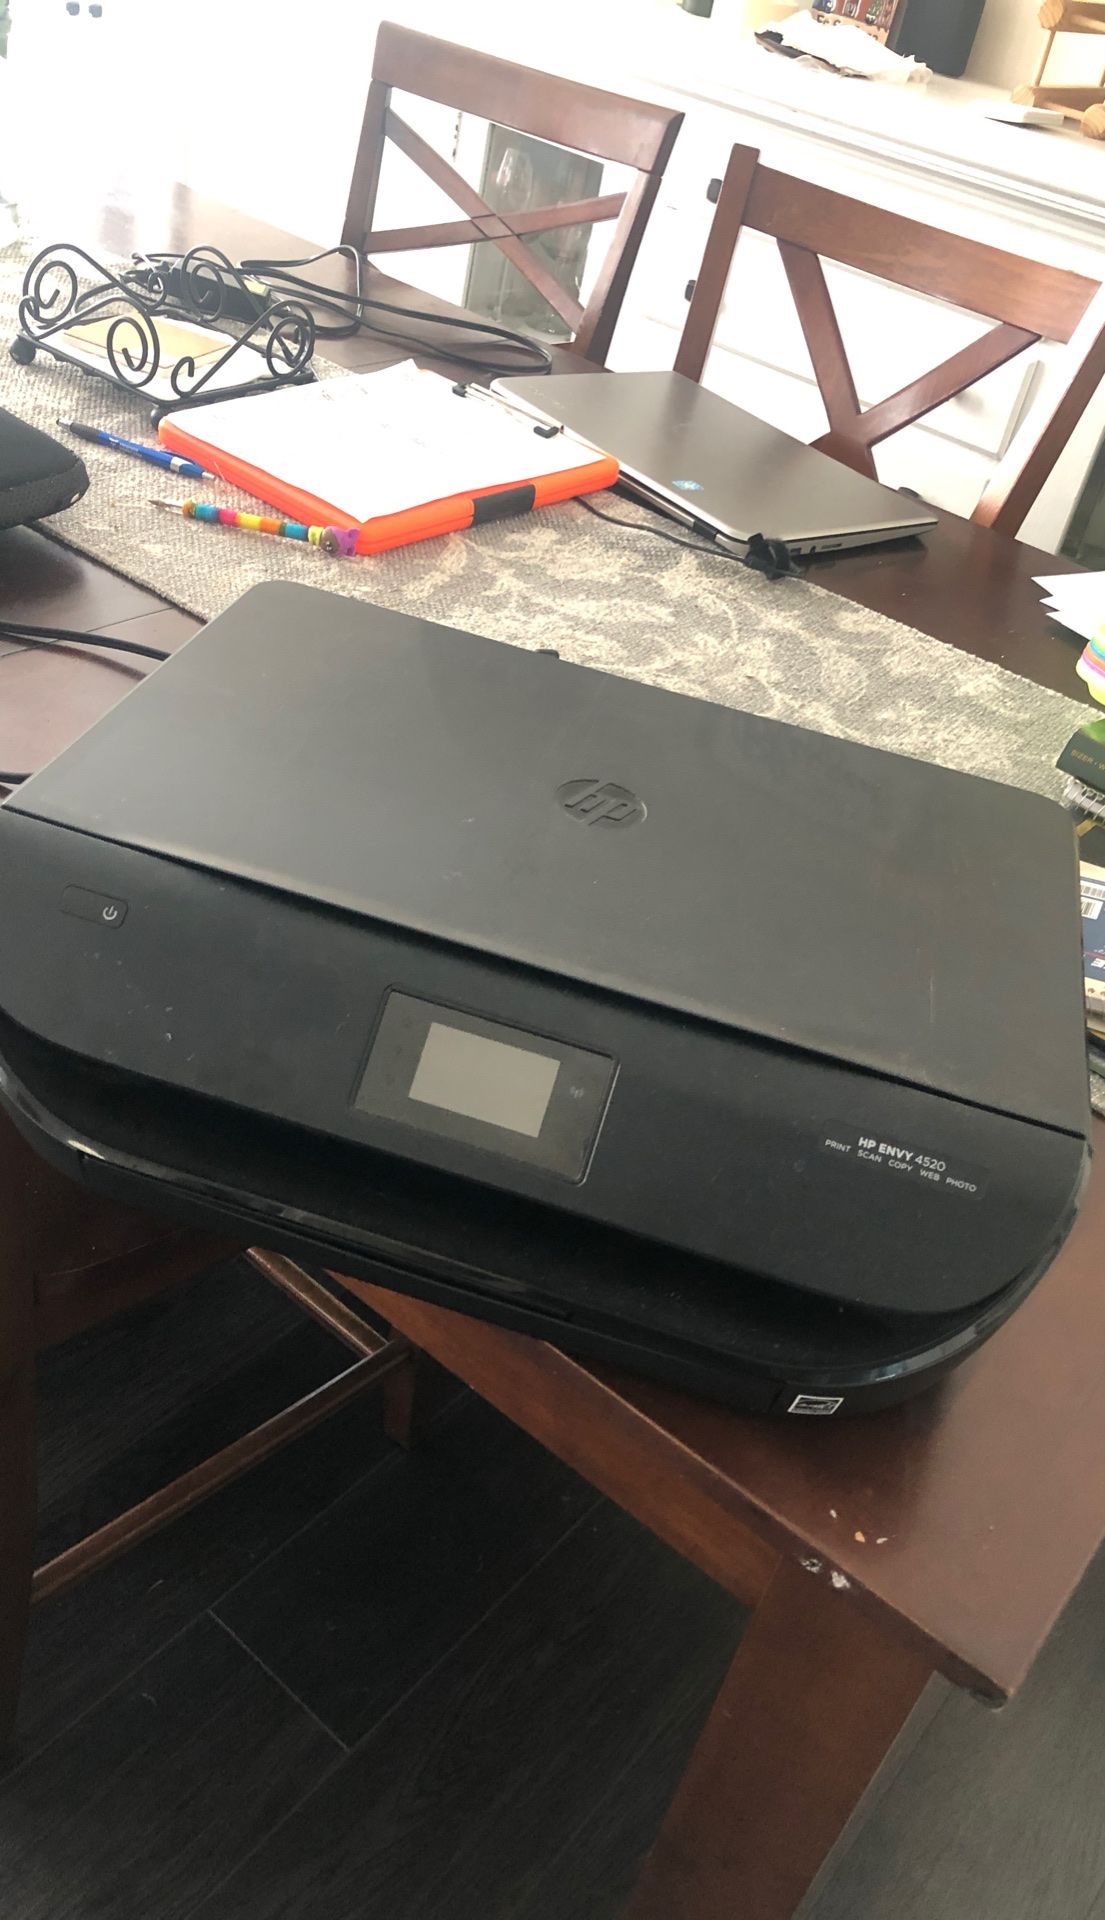 HP envy 4520 printer